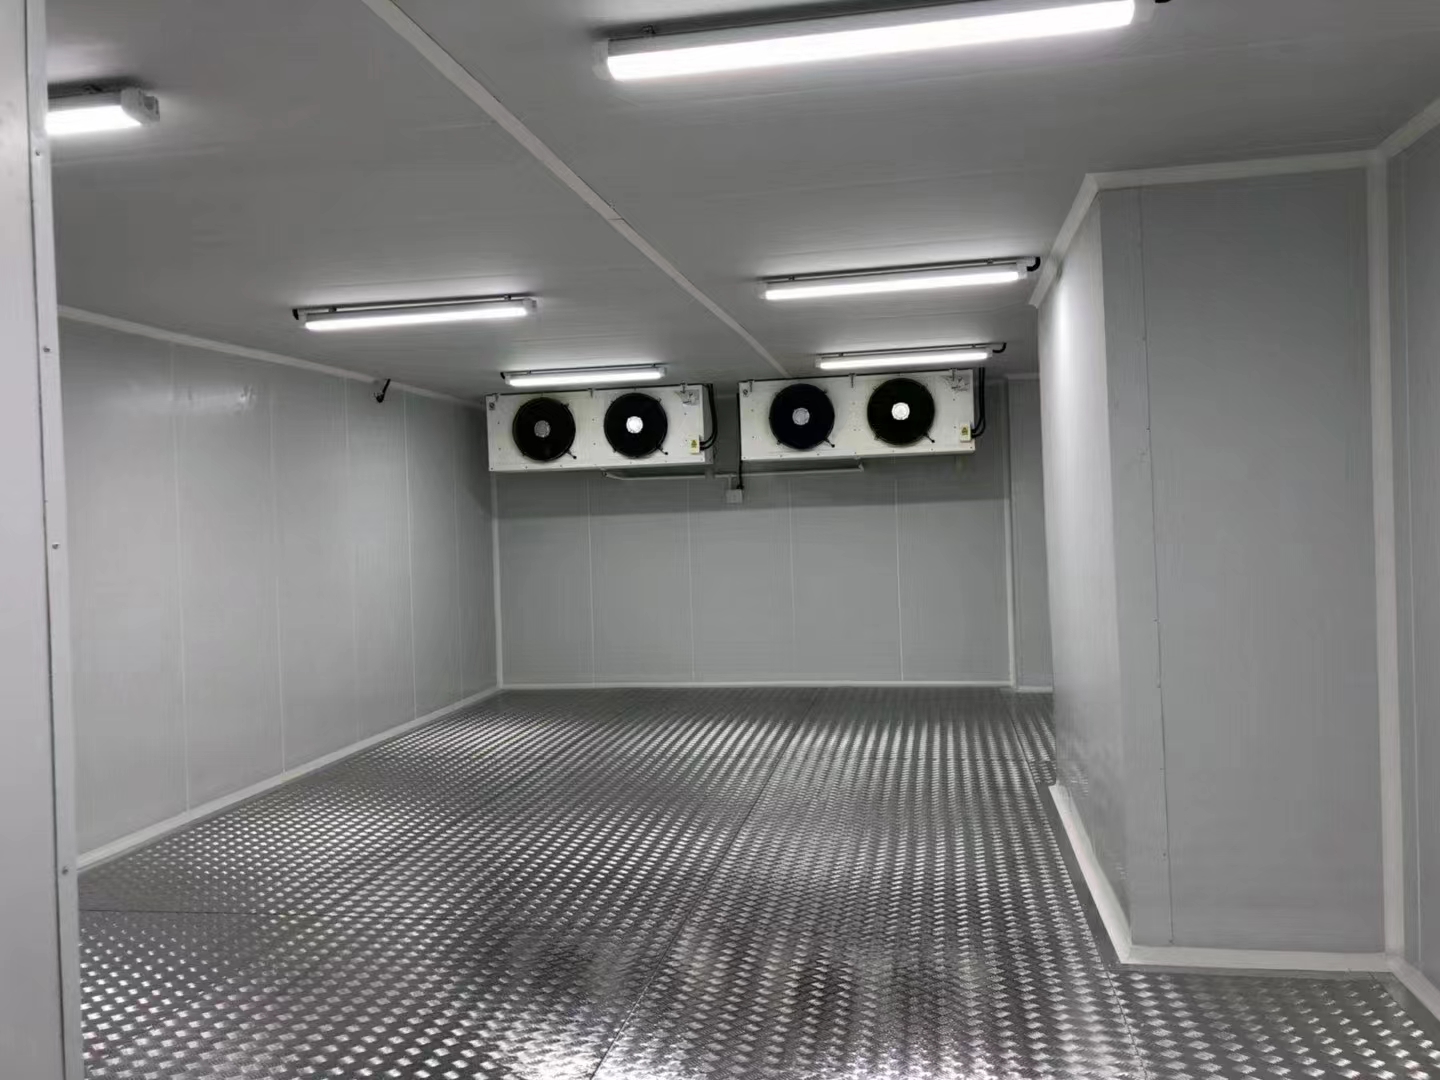 Cool Room/Cool Storage with Bitzer Refrigerator Compressor Unit for Vegetable Storage 